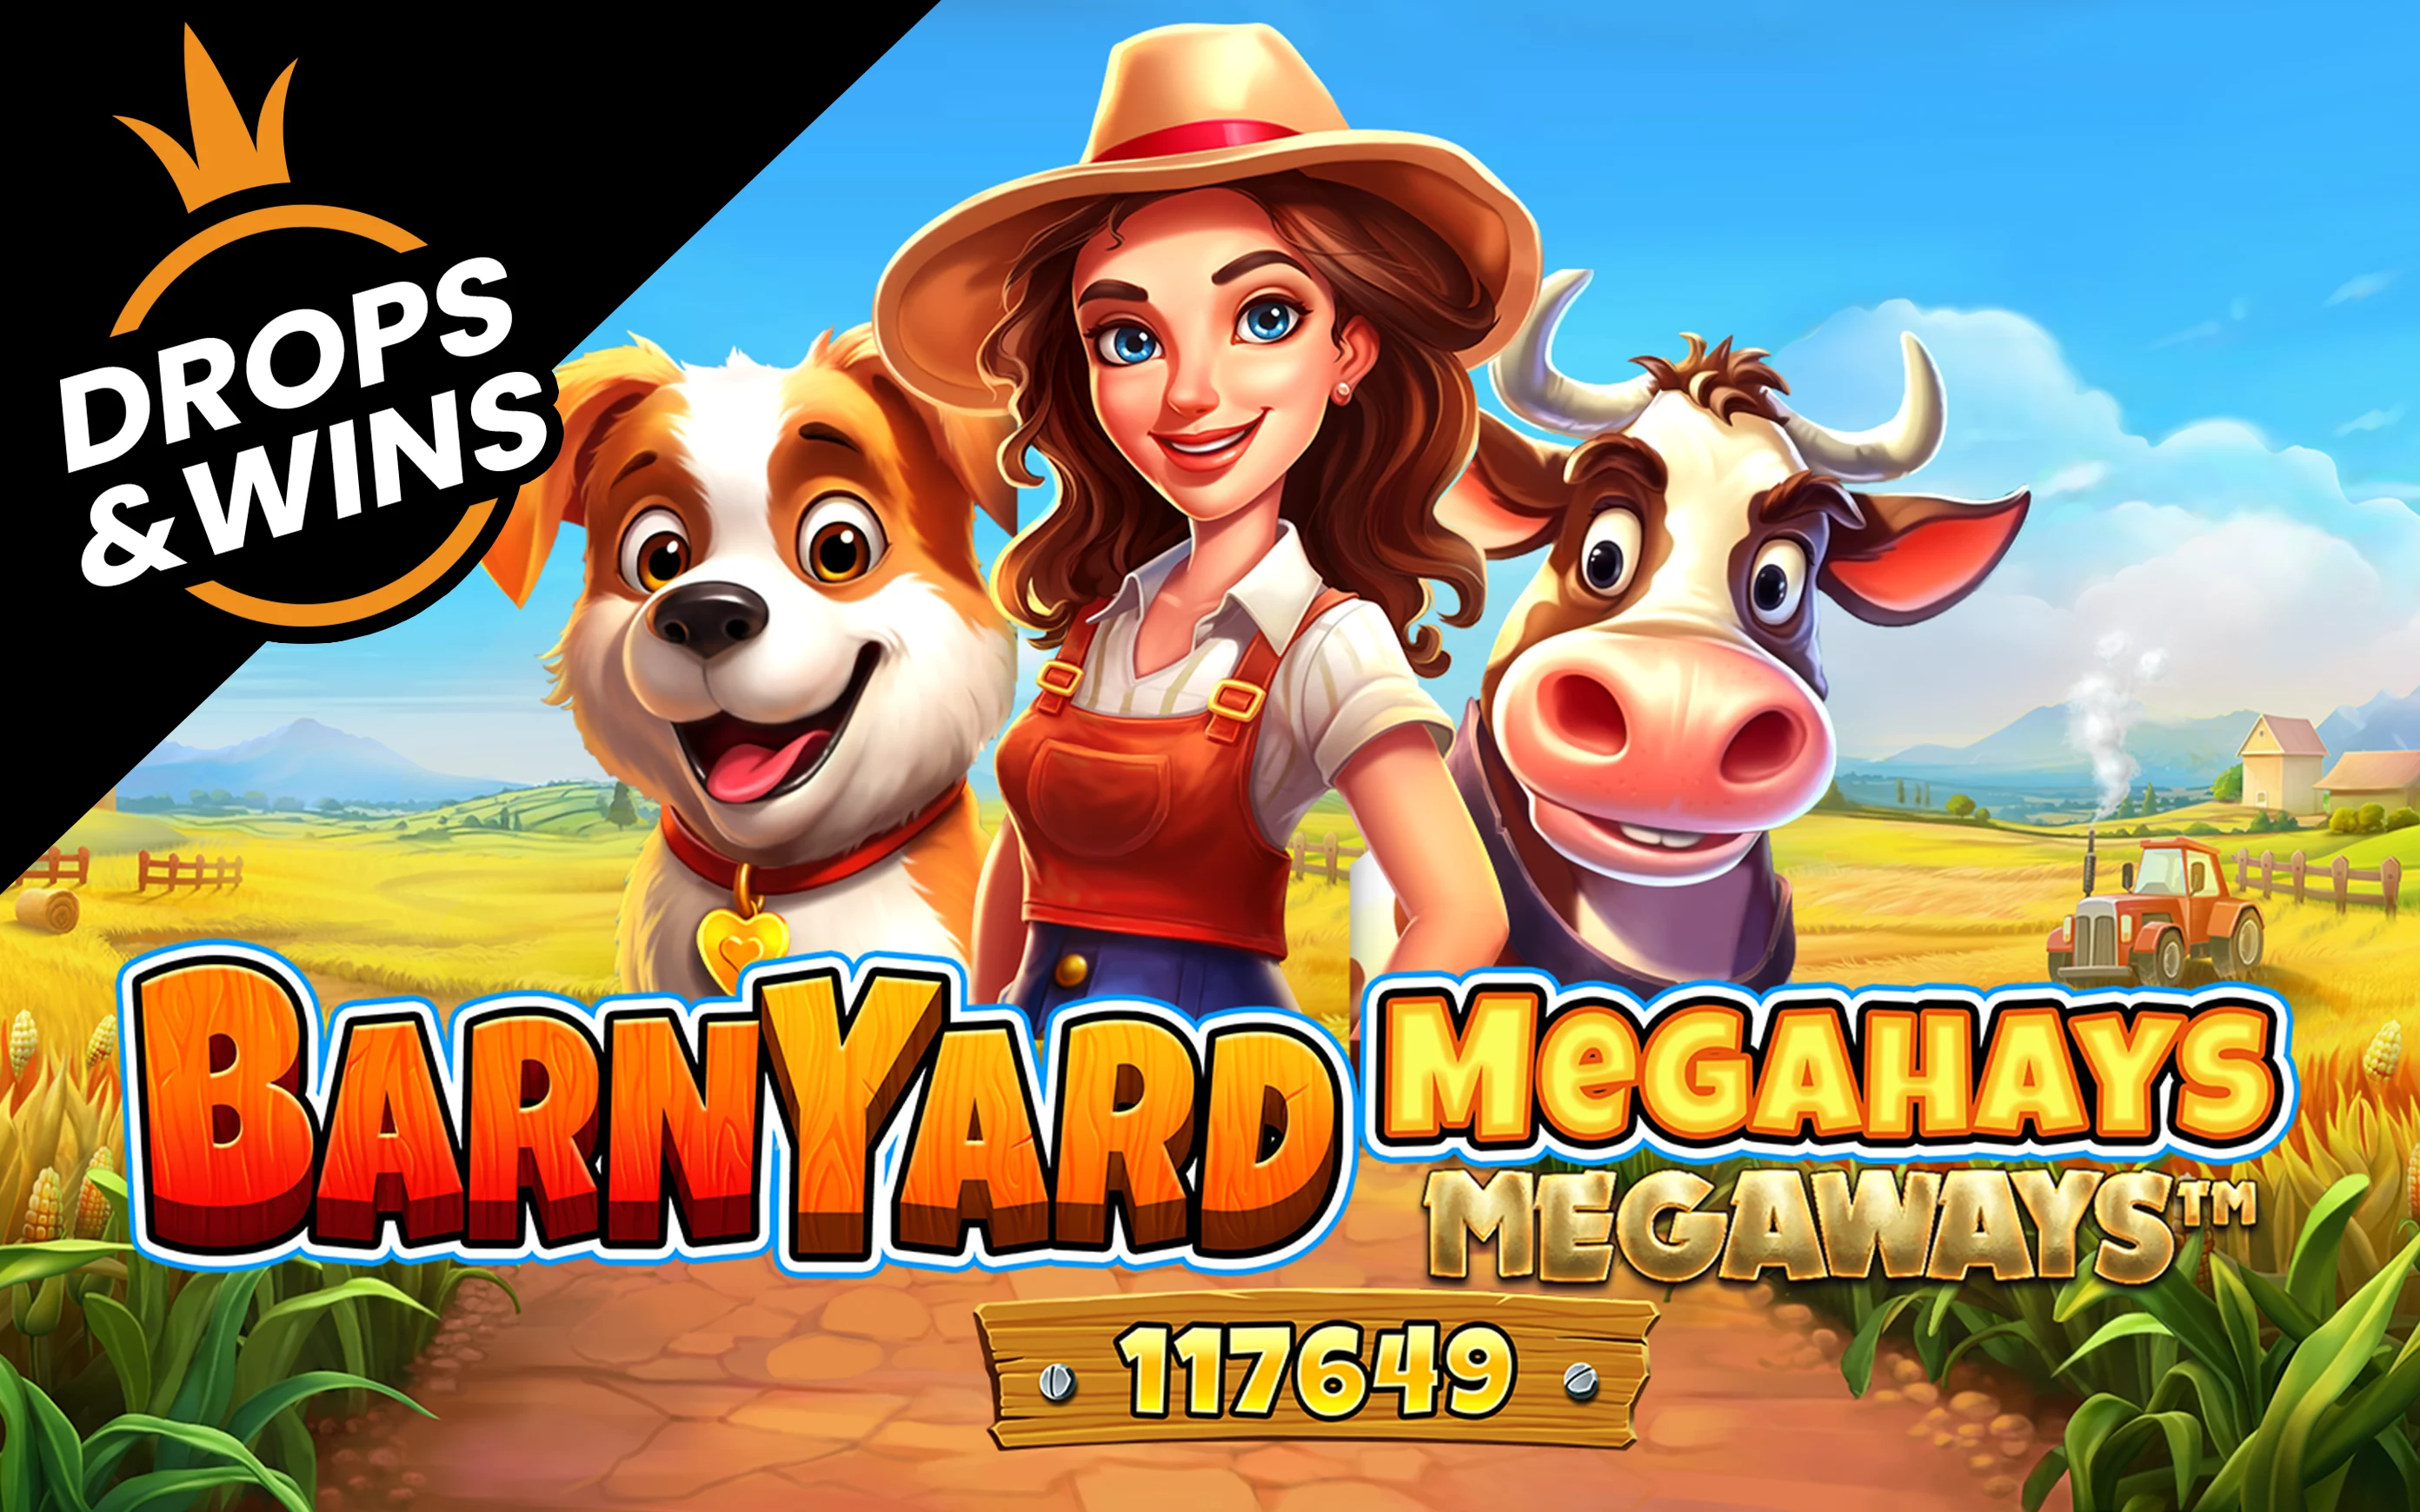 Play Barnyard Megahays Megaways™ on Starcasino.be online casino